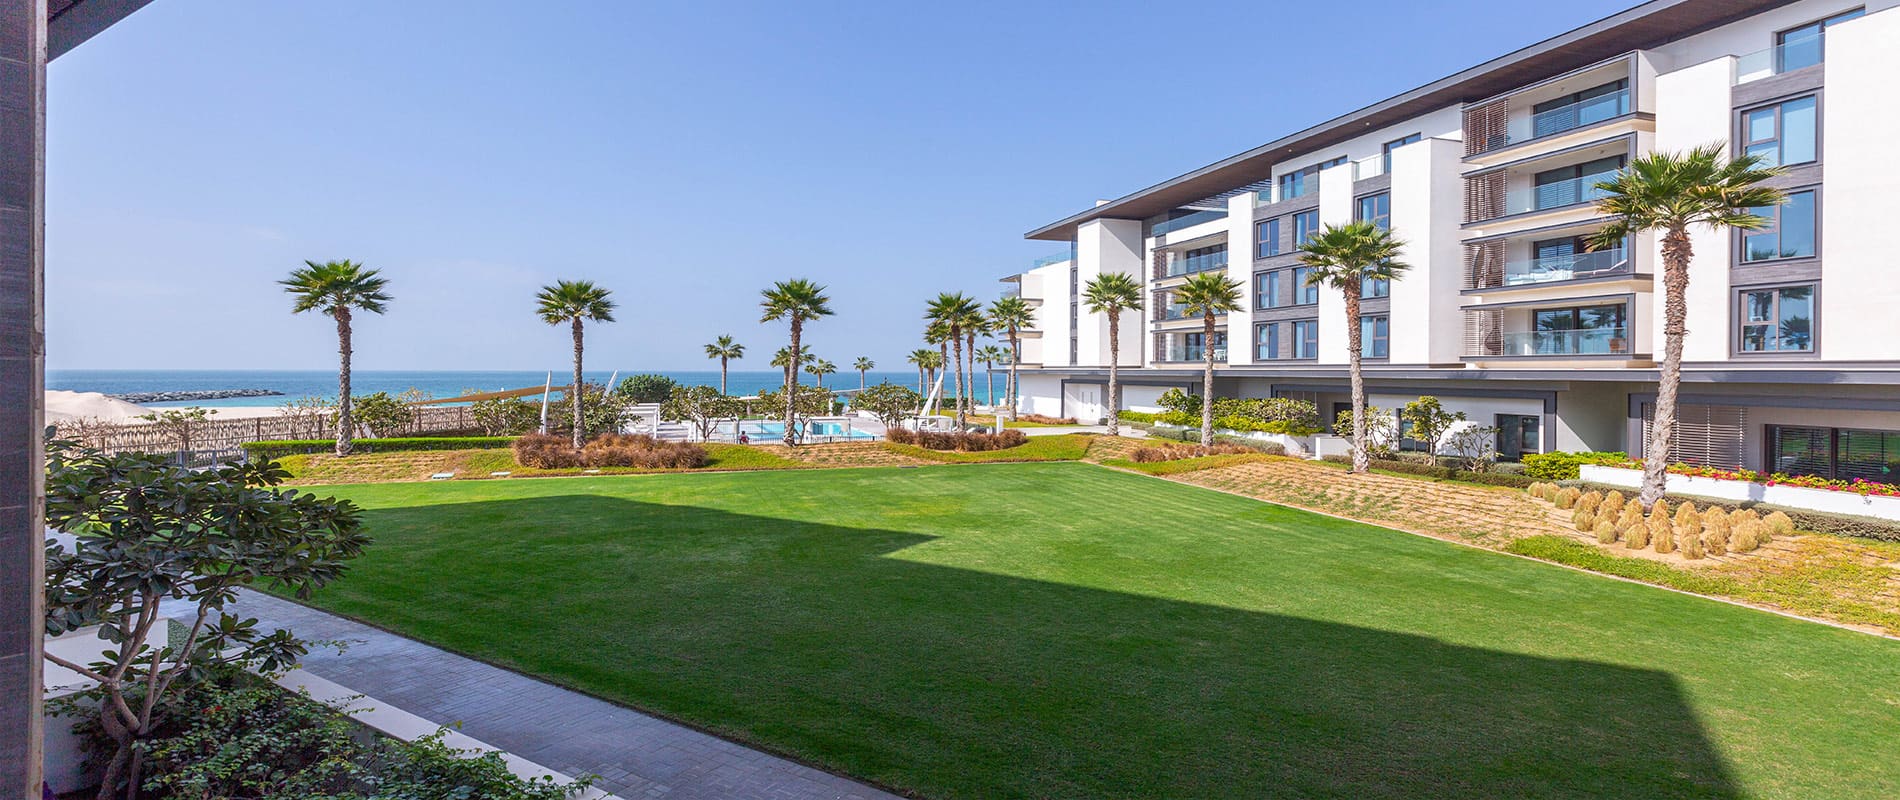 Nikki Beach Residences Apartments for Sale & Rent at Pearl Jumeirah